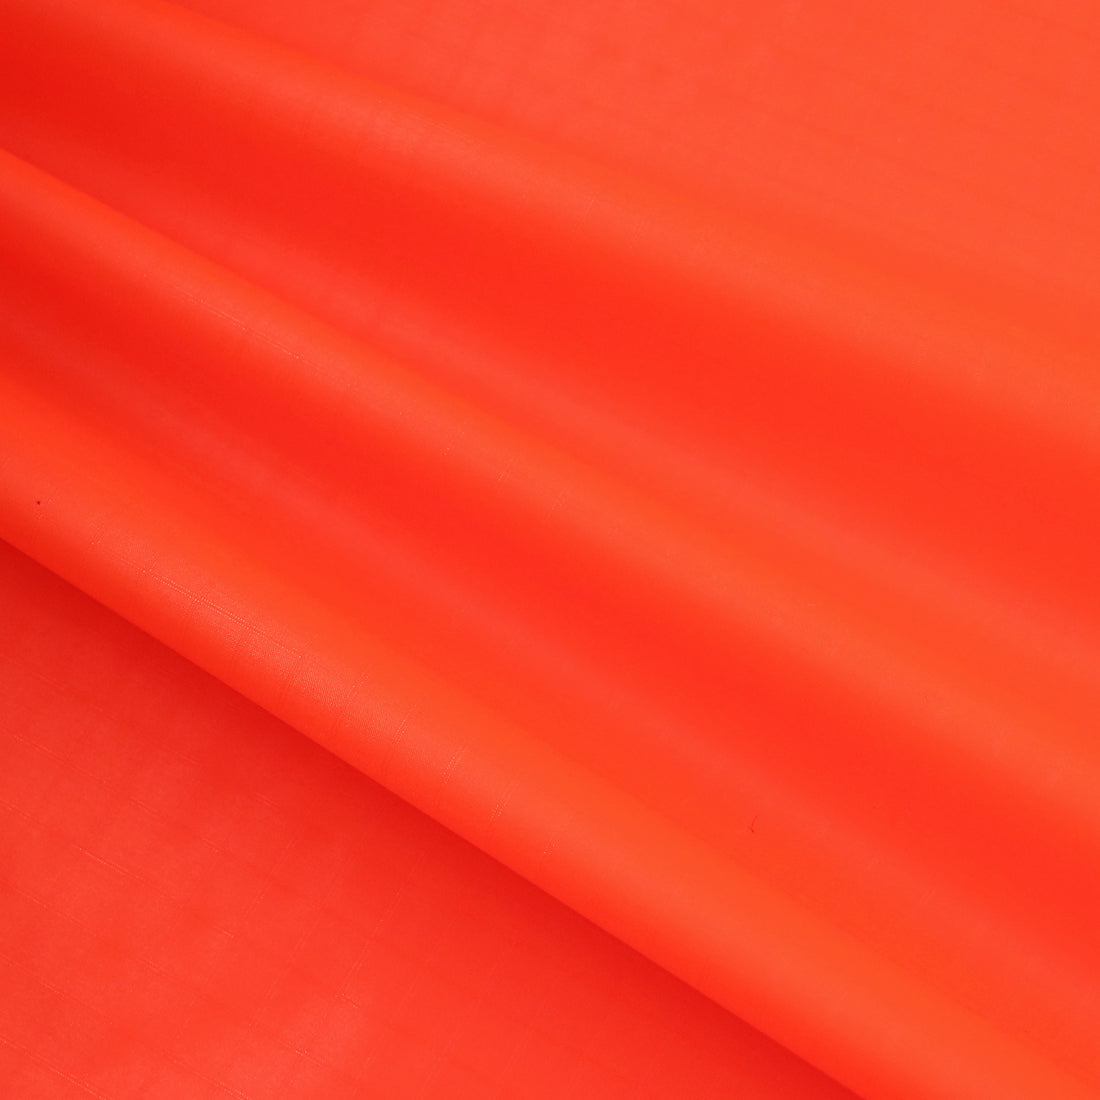 1-10M Icarex Fabric 35g/m² Ultralight PC31 Ripstop Polyester Kite Sail Fabric